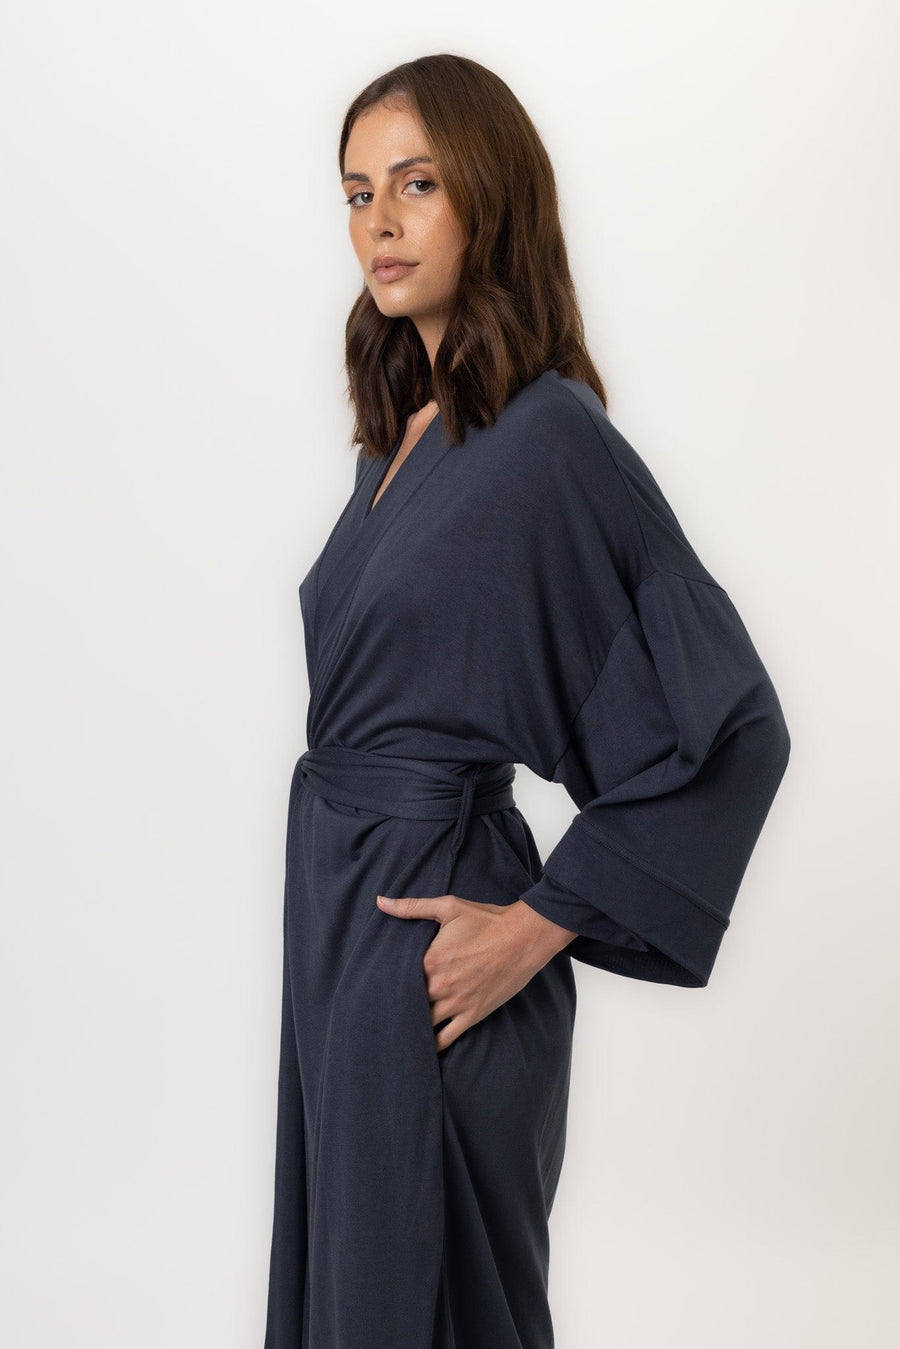 Felicity Robe | Graphite Felicity Robe Robes Pajamas Australia Online | Reverie the Label  TOPS Felicity Robe